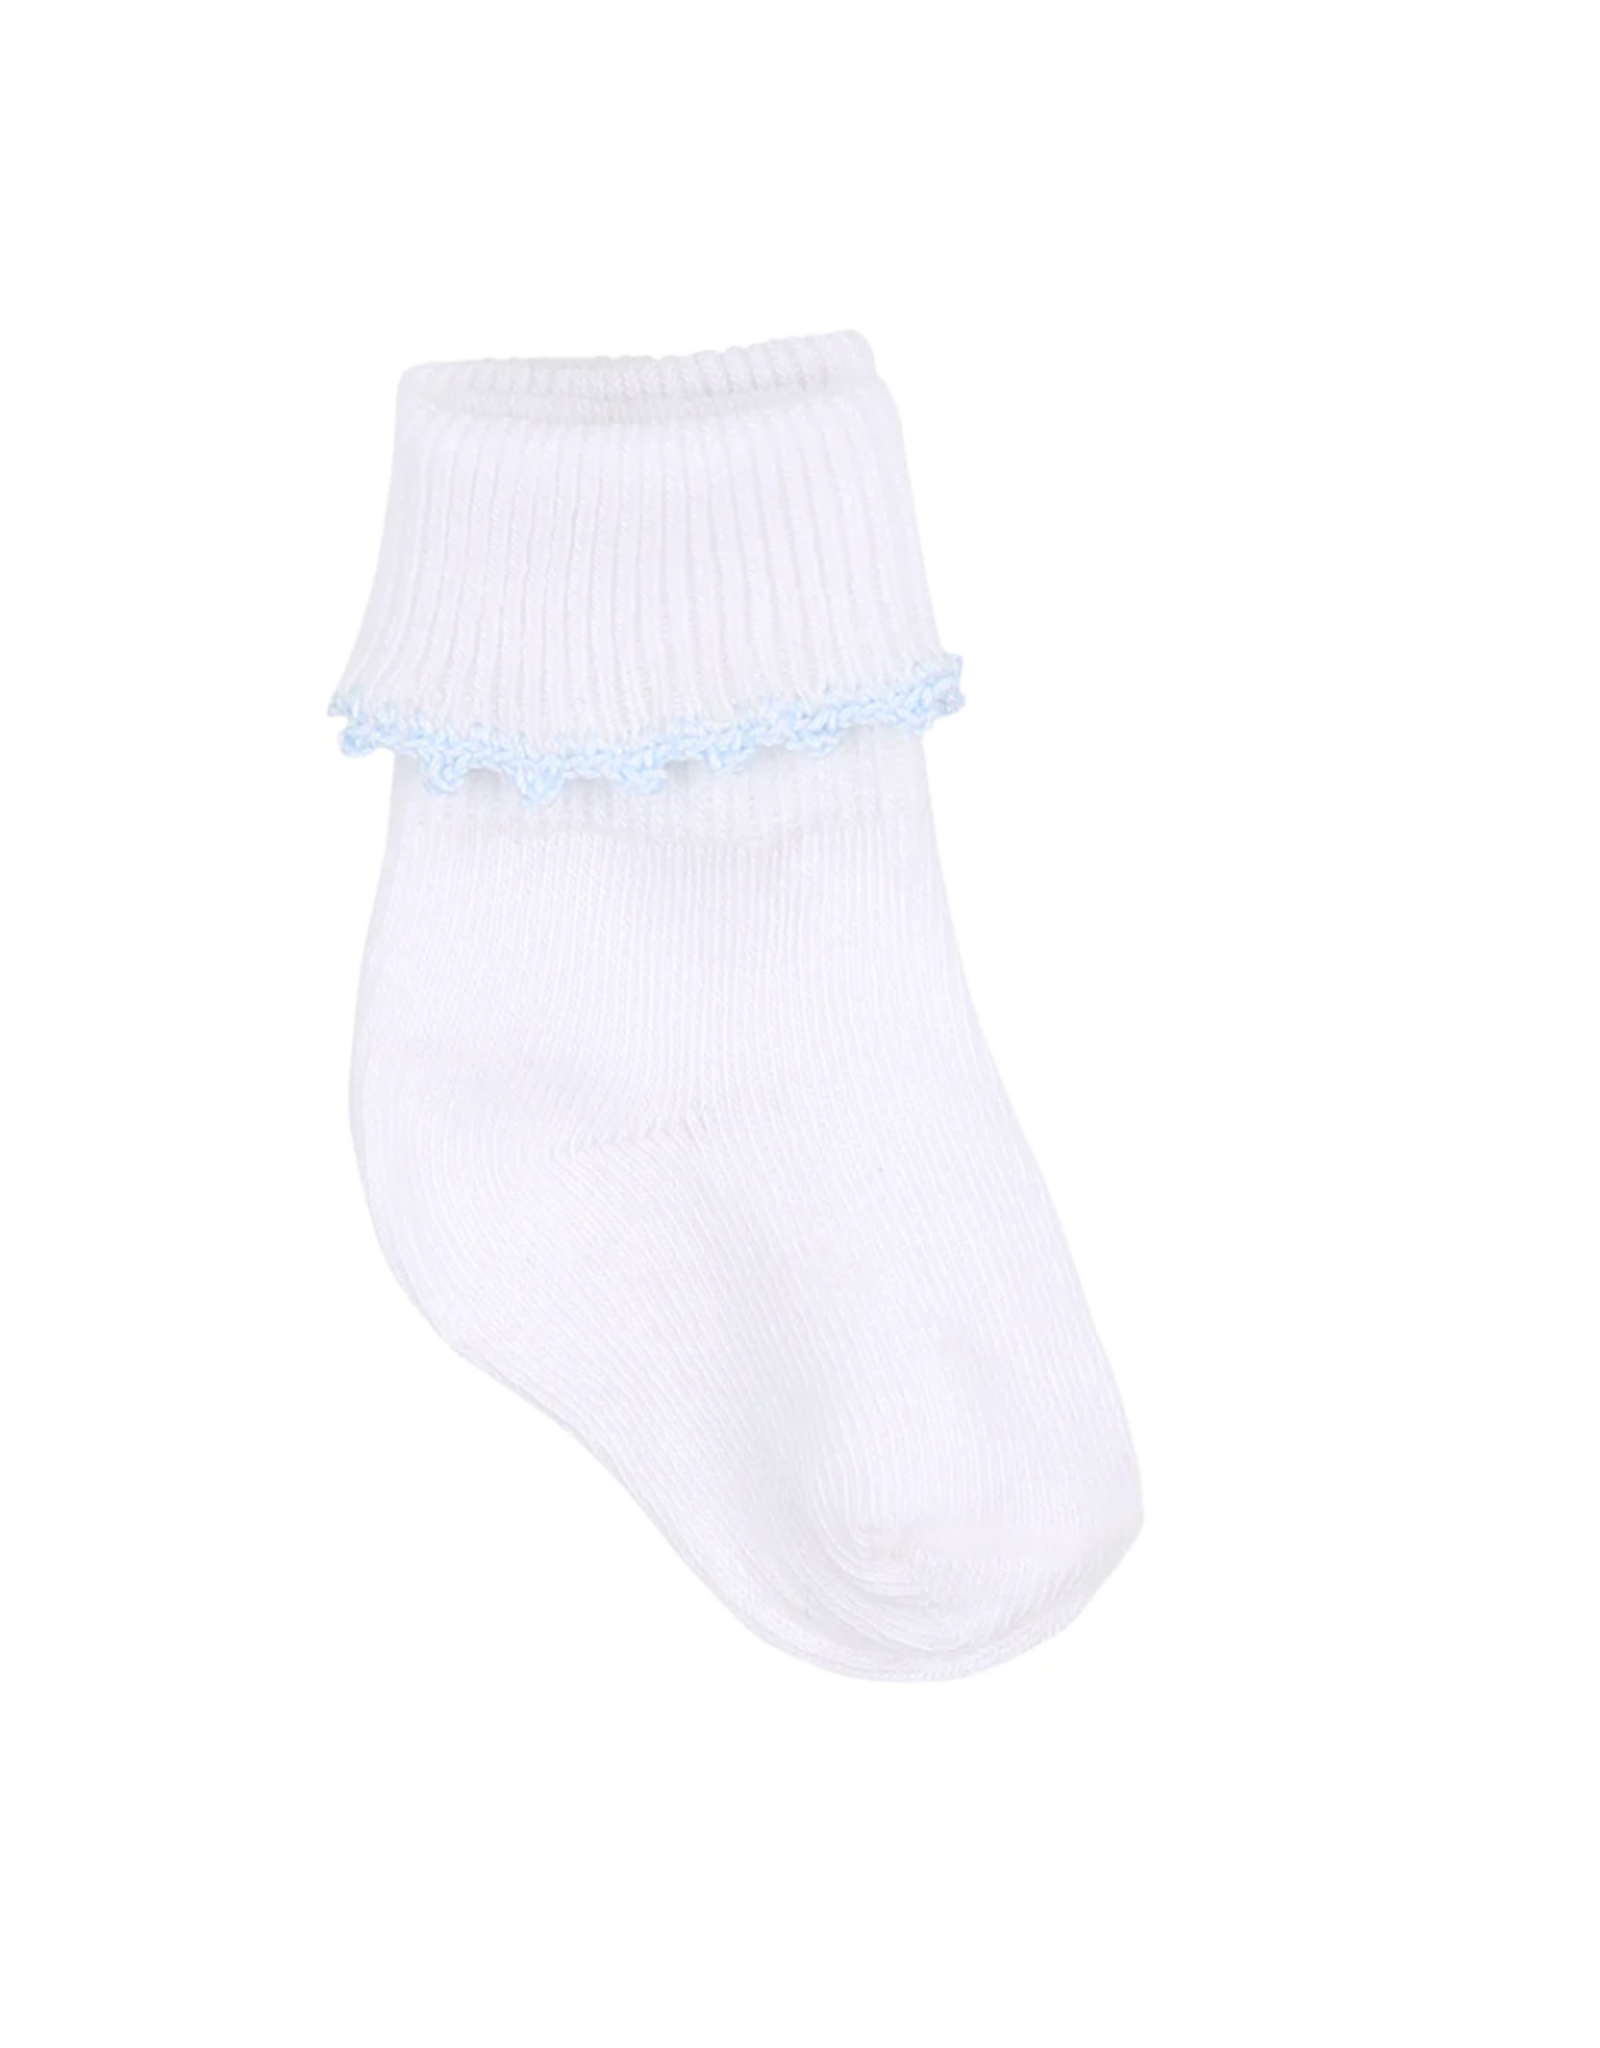 Magnolia Baby Baby Joy Embroidered Socks Light Blue